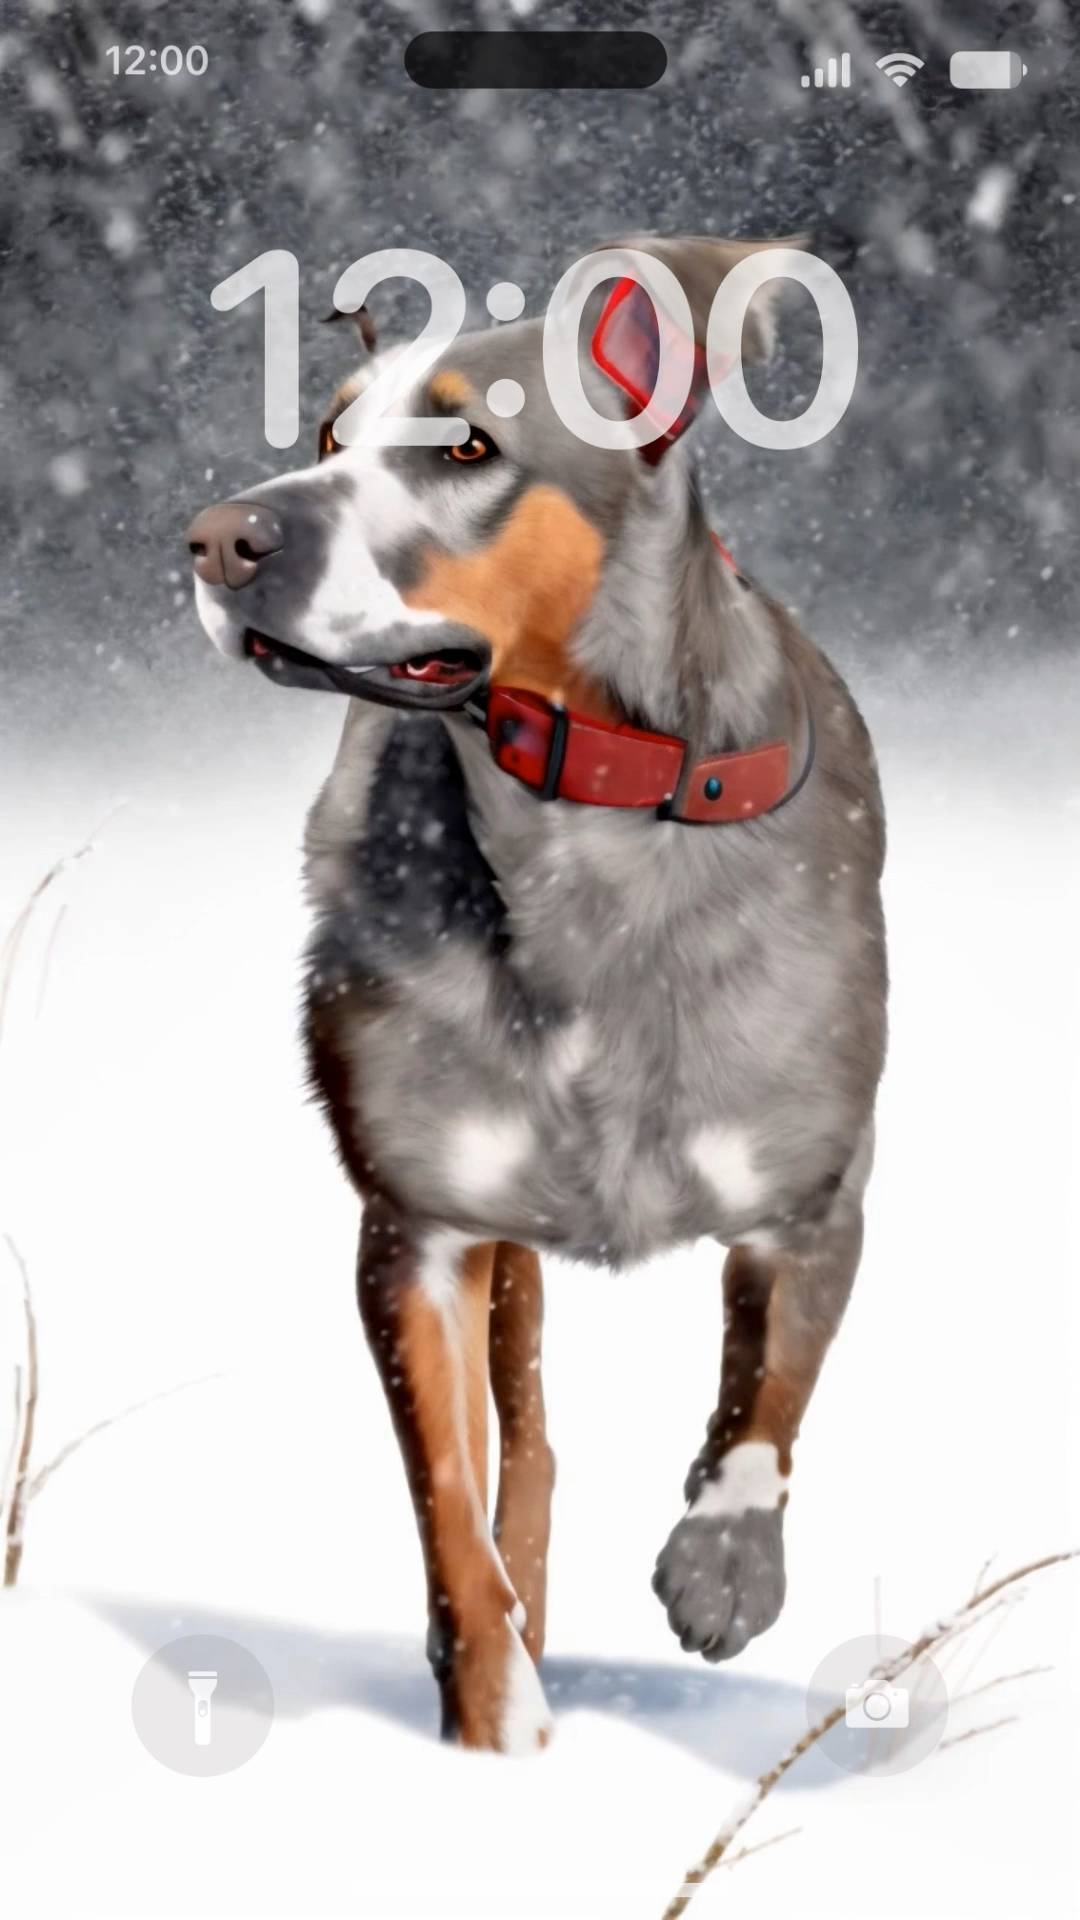 Dog in snowy day 라이브 배경 화면[5xB6MA3AgnLP6CmmZGAL]